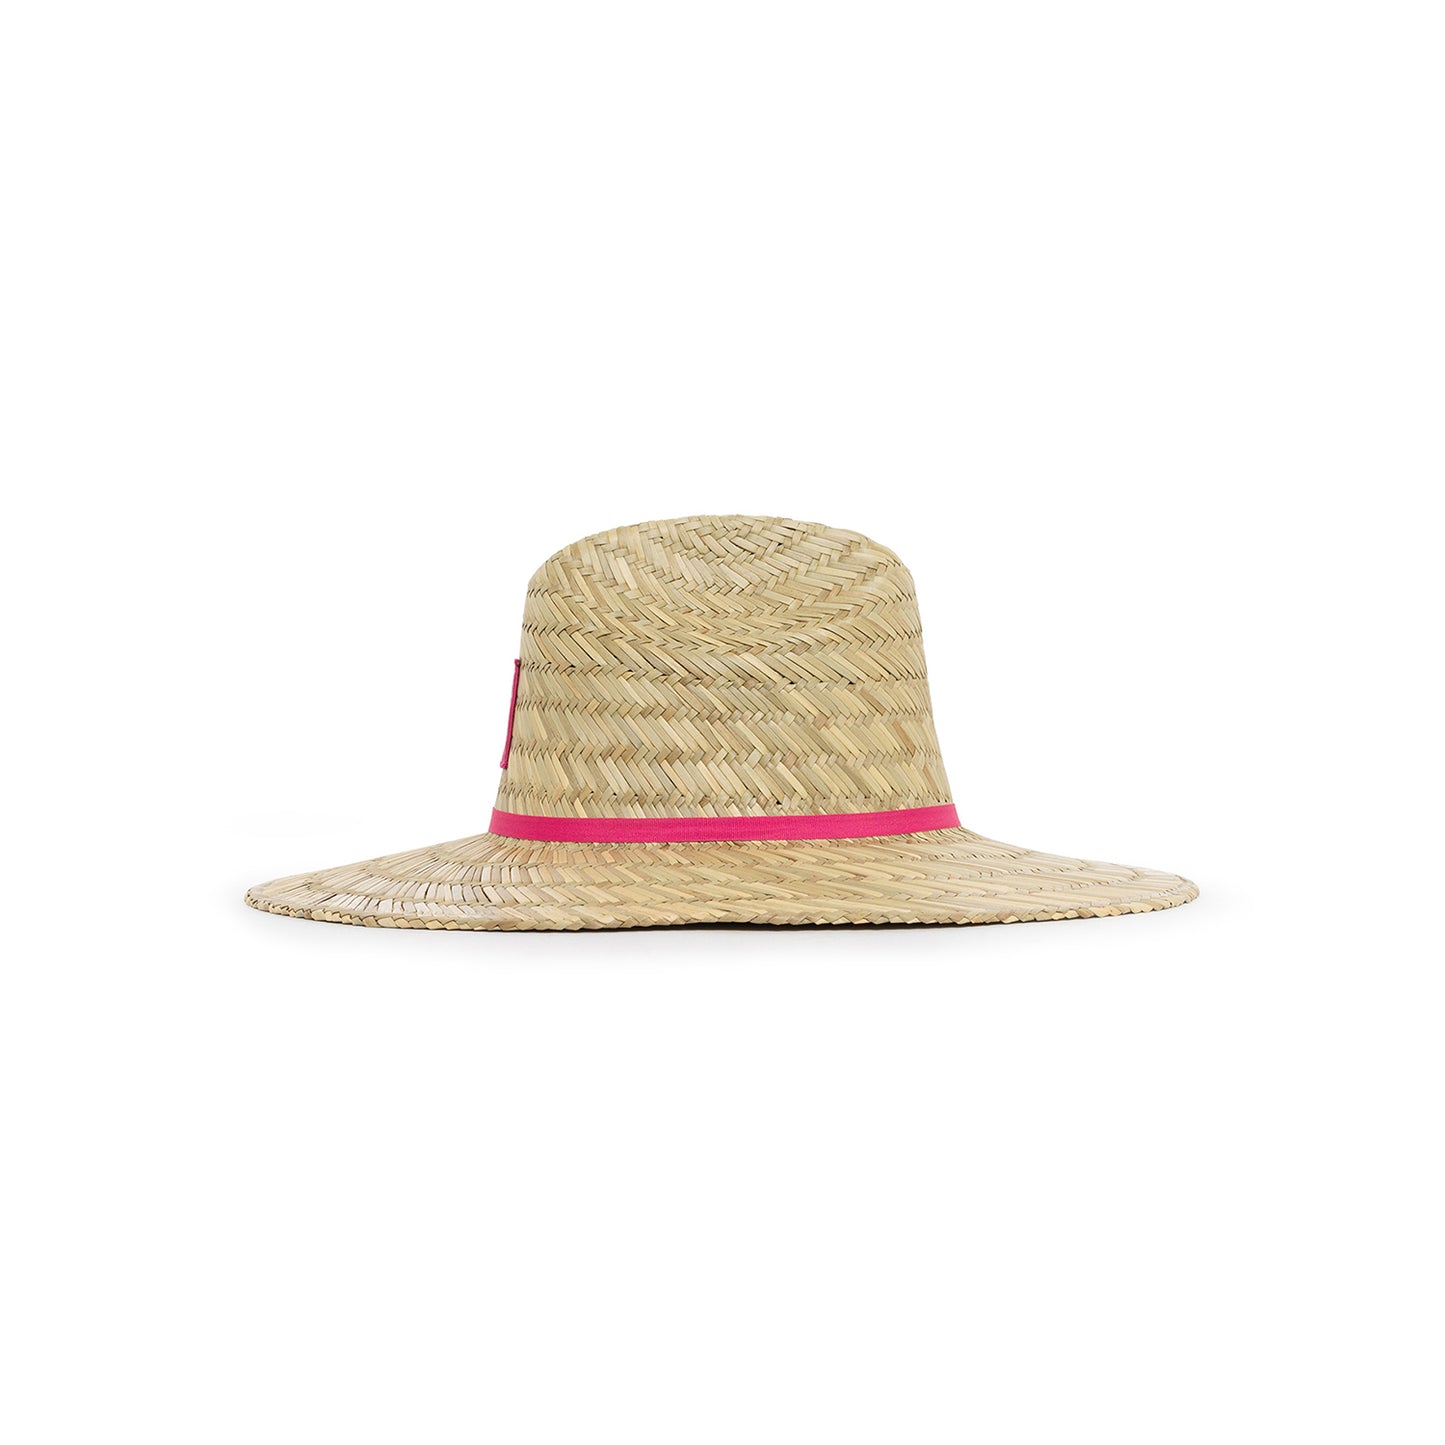 Sydney Sixers BBL Straw Hat